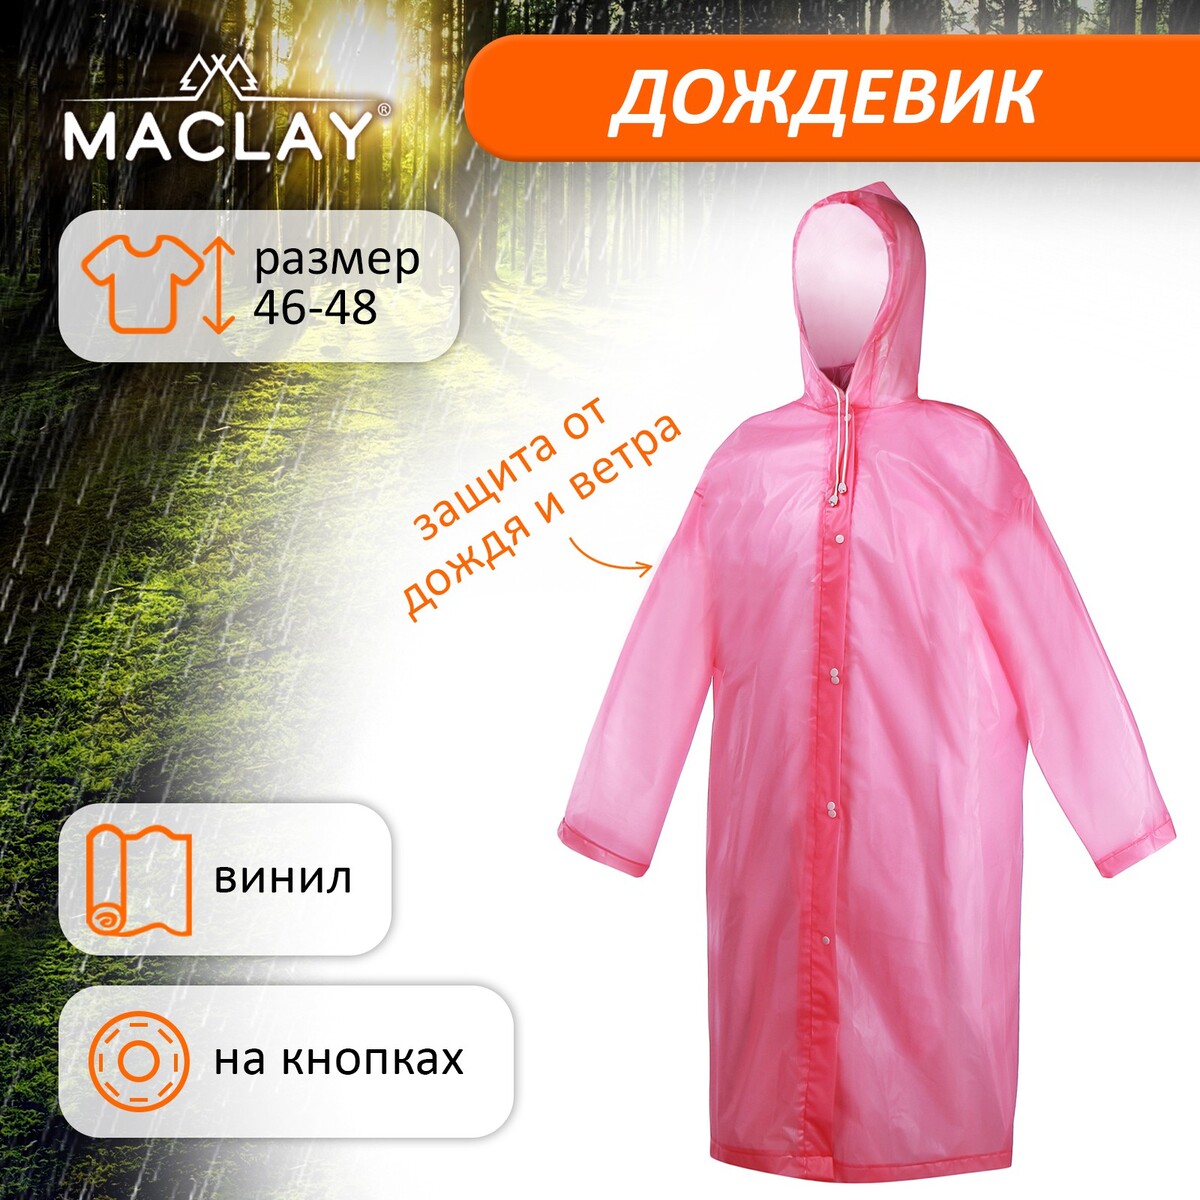 Дождевик-плащ maclay, р. 46-48, цвет розовый дождевик peg perego for strollers